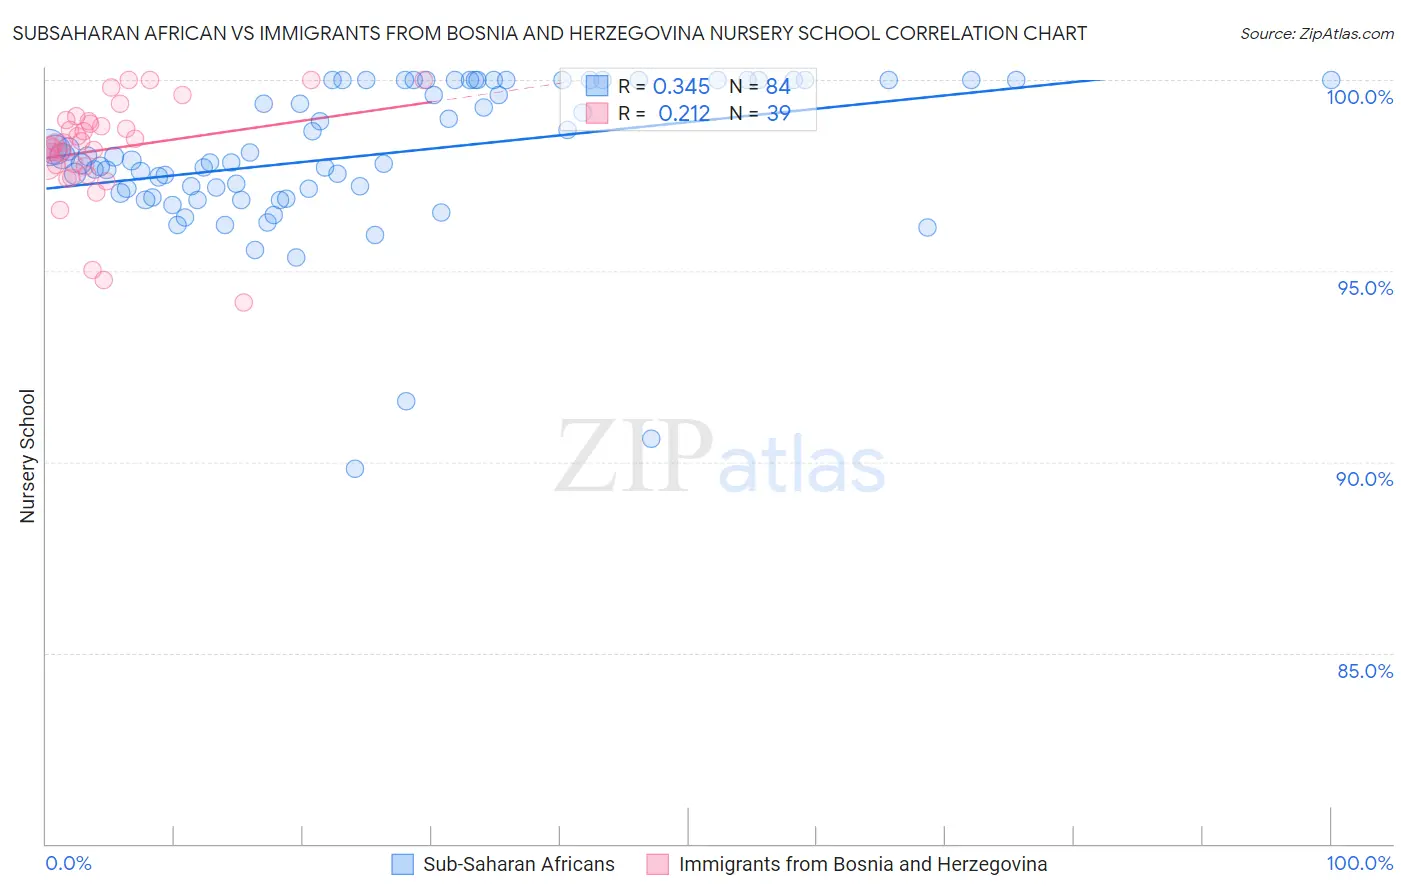 Subsaharan African vs Immigrants from Bosnia and Herzegovina Nursery School